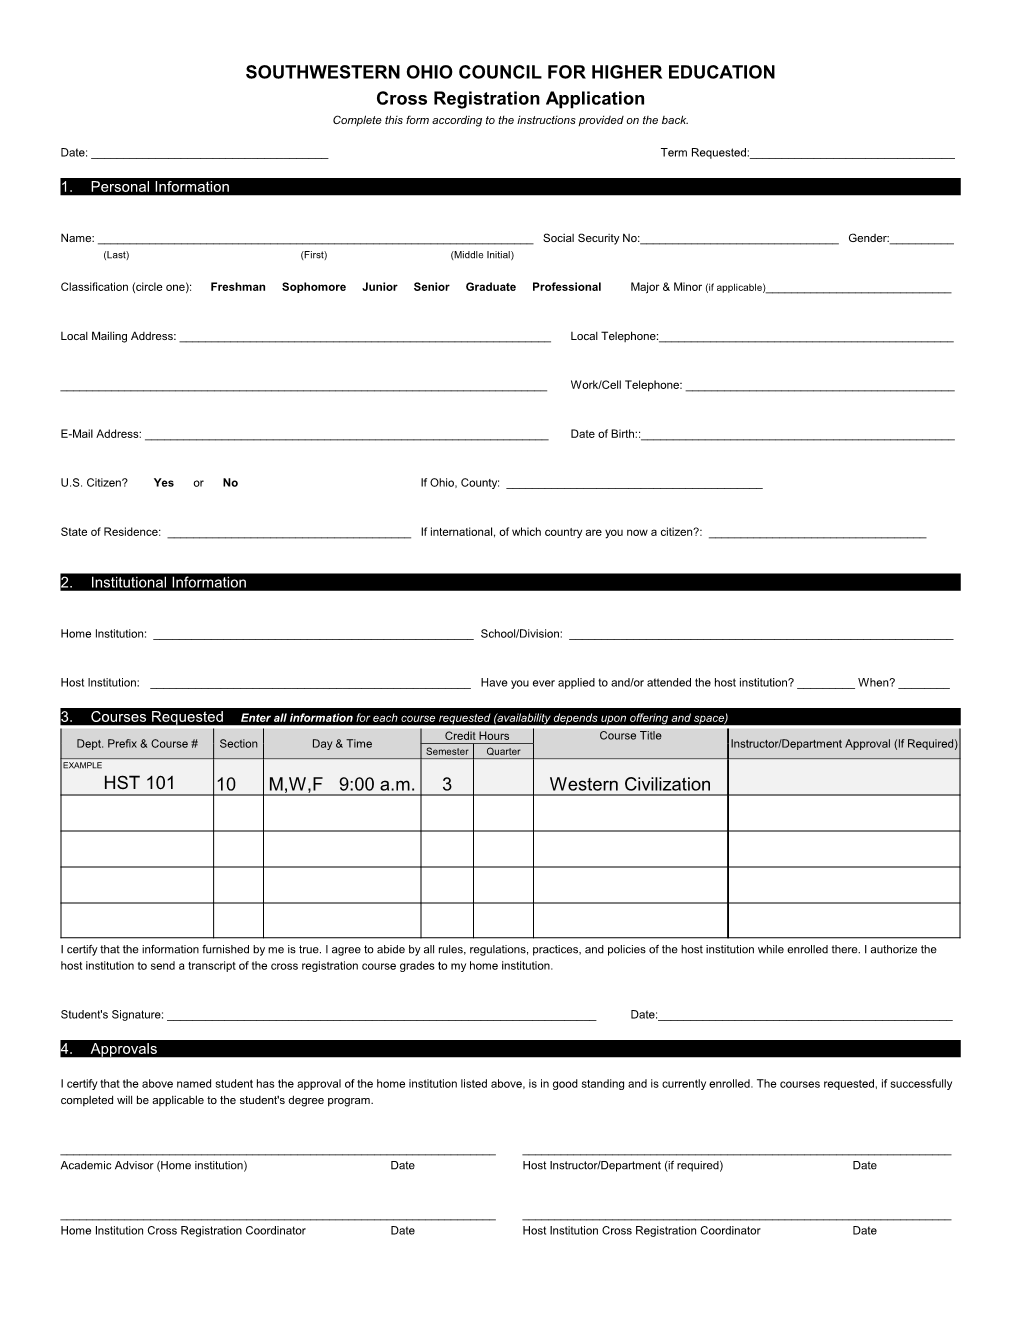 SOCHE Registration Form